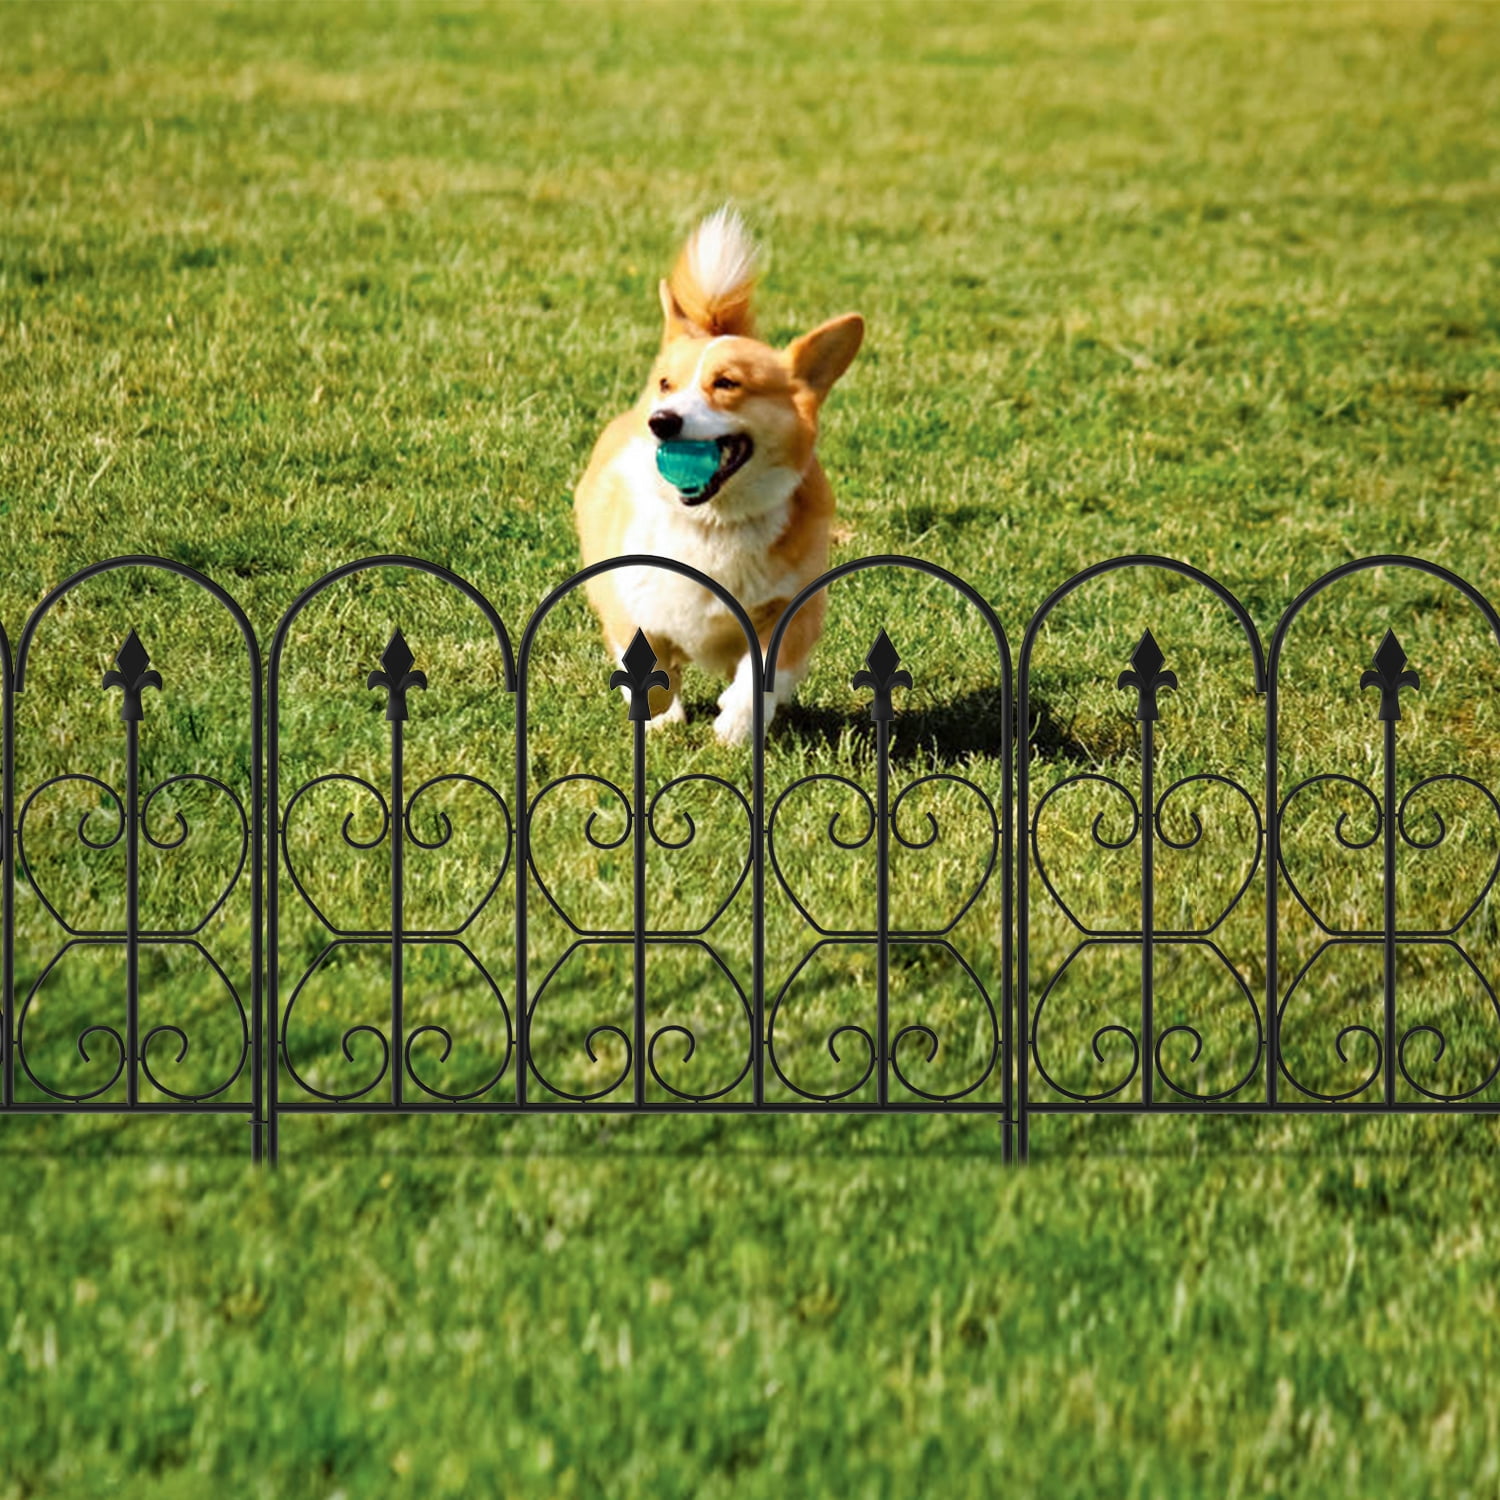 Decor Fence Garden Yard Lawn Barrier Outdoor Landscape Rustproof Dog Home Border 